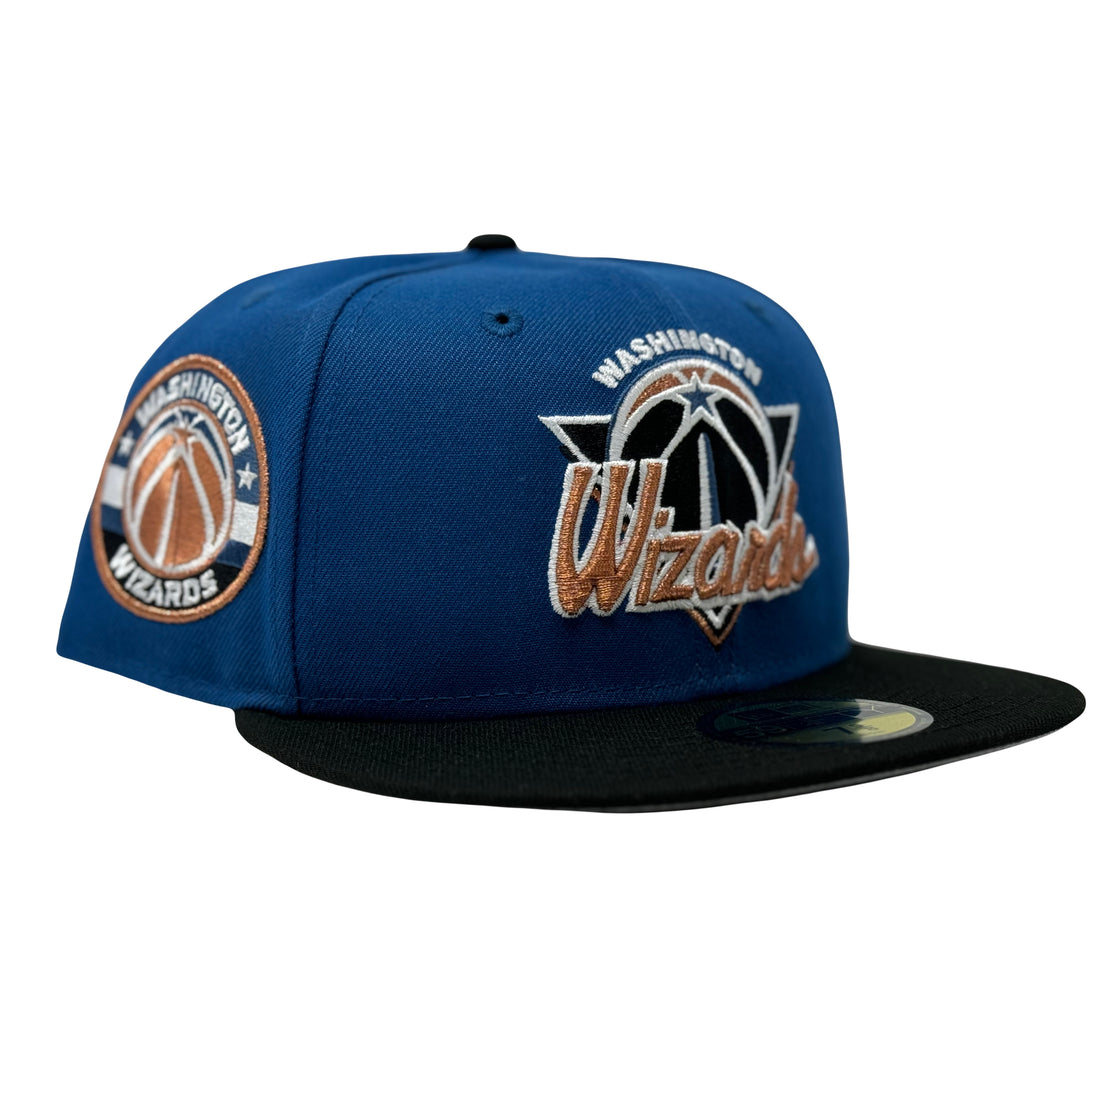 Washington Wizards 5950 New Era Fitted Hat